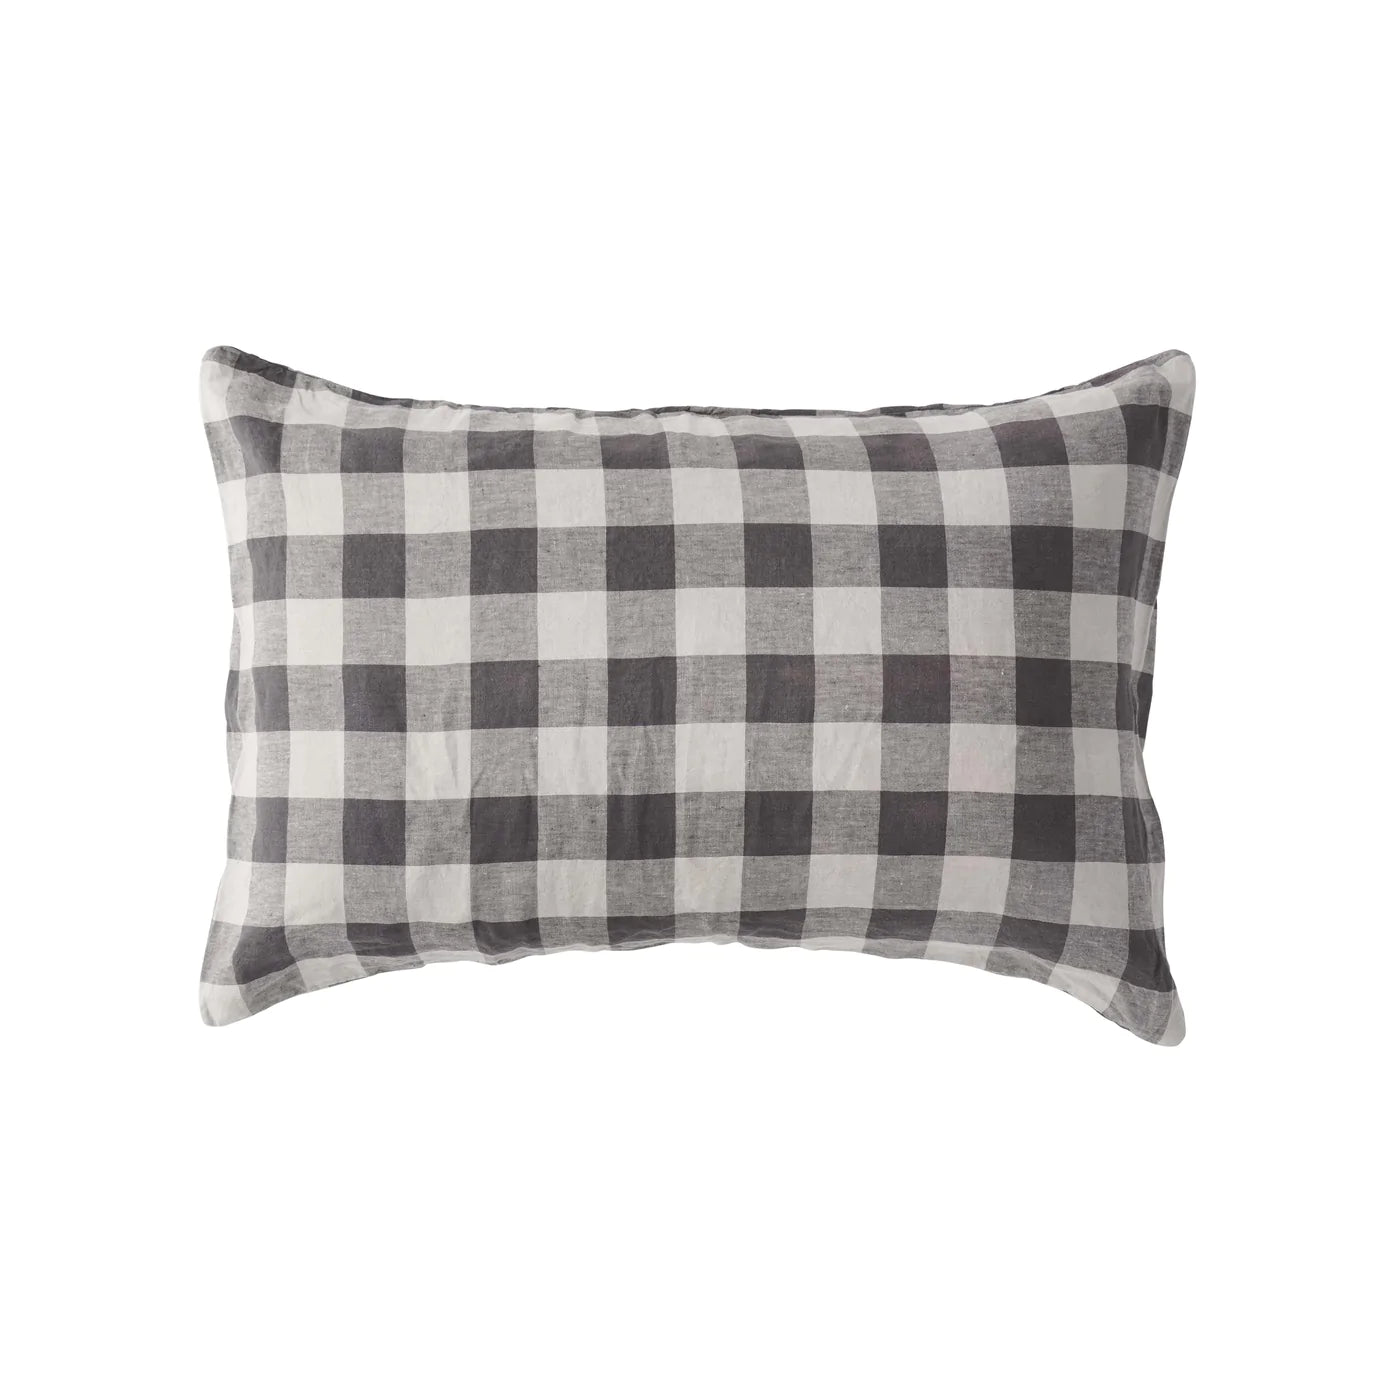 Pair of Linen Pillowcases - Liqorice Gingham